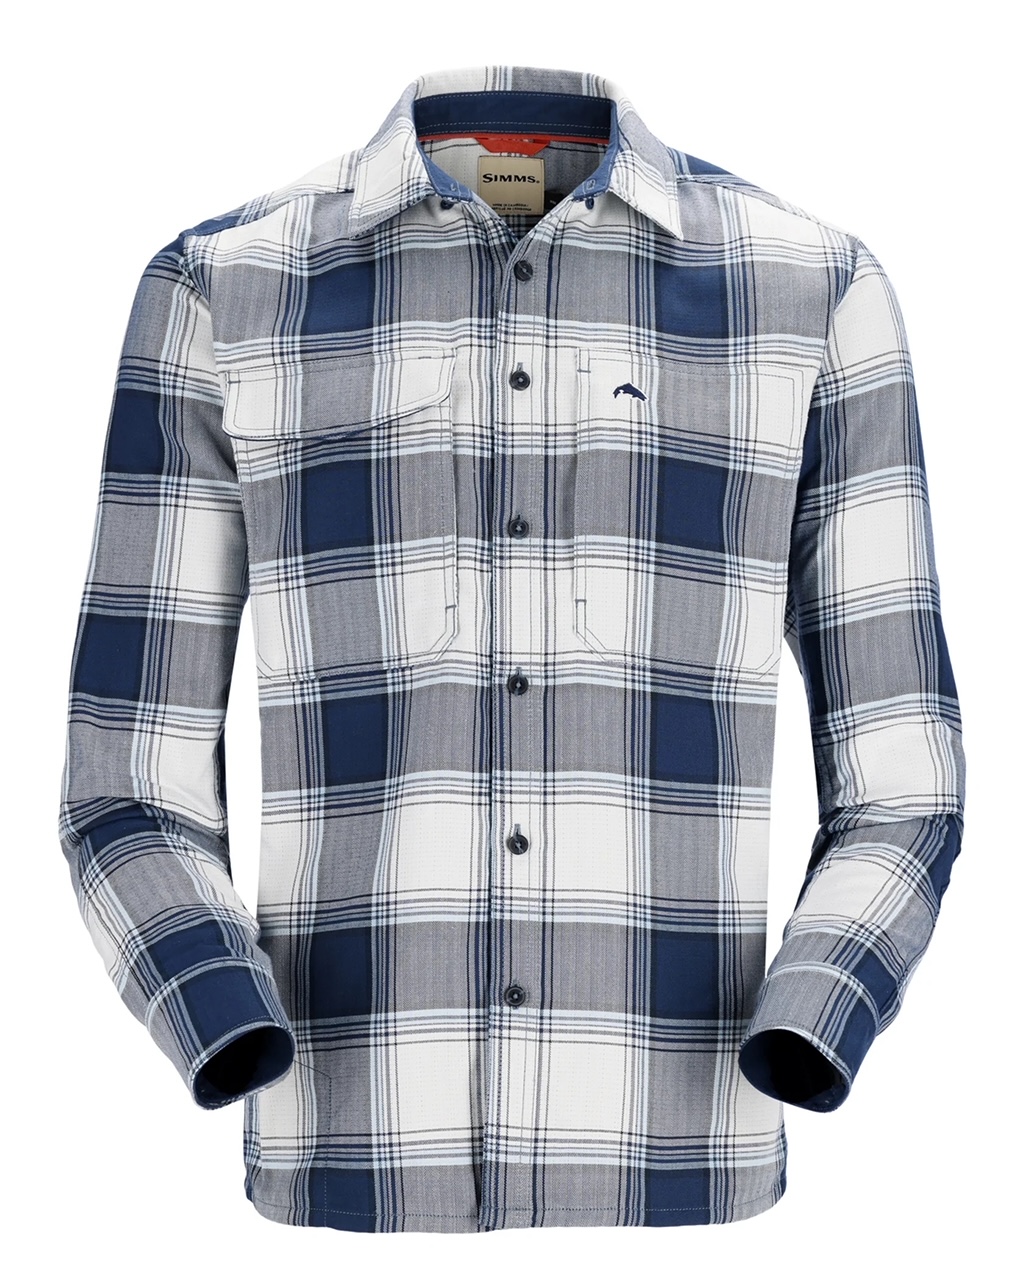 Simms M's Guide Flannel LS Shirt - Navy/White Dimensional Buffalo - Medium